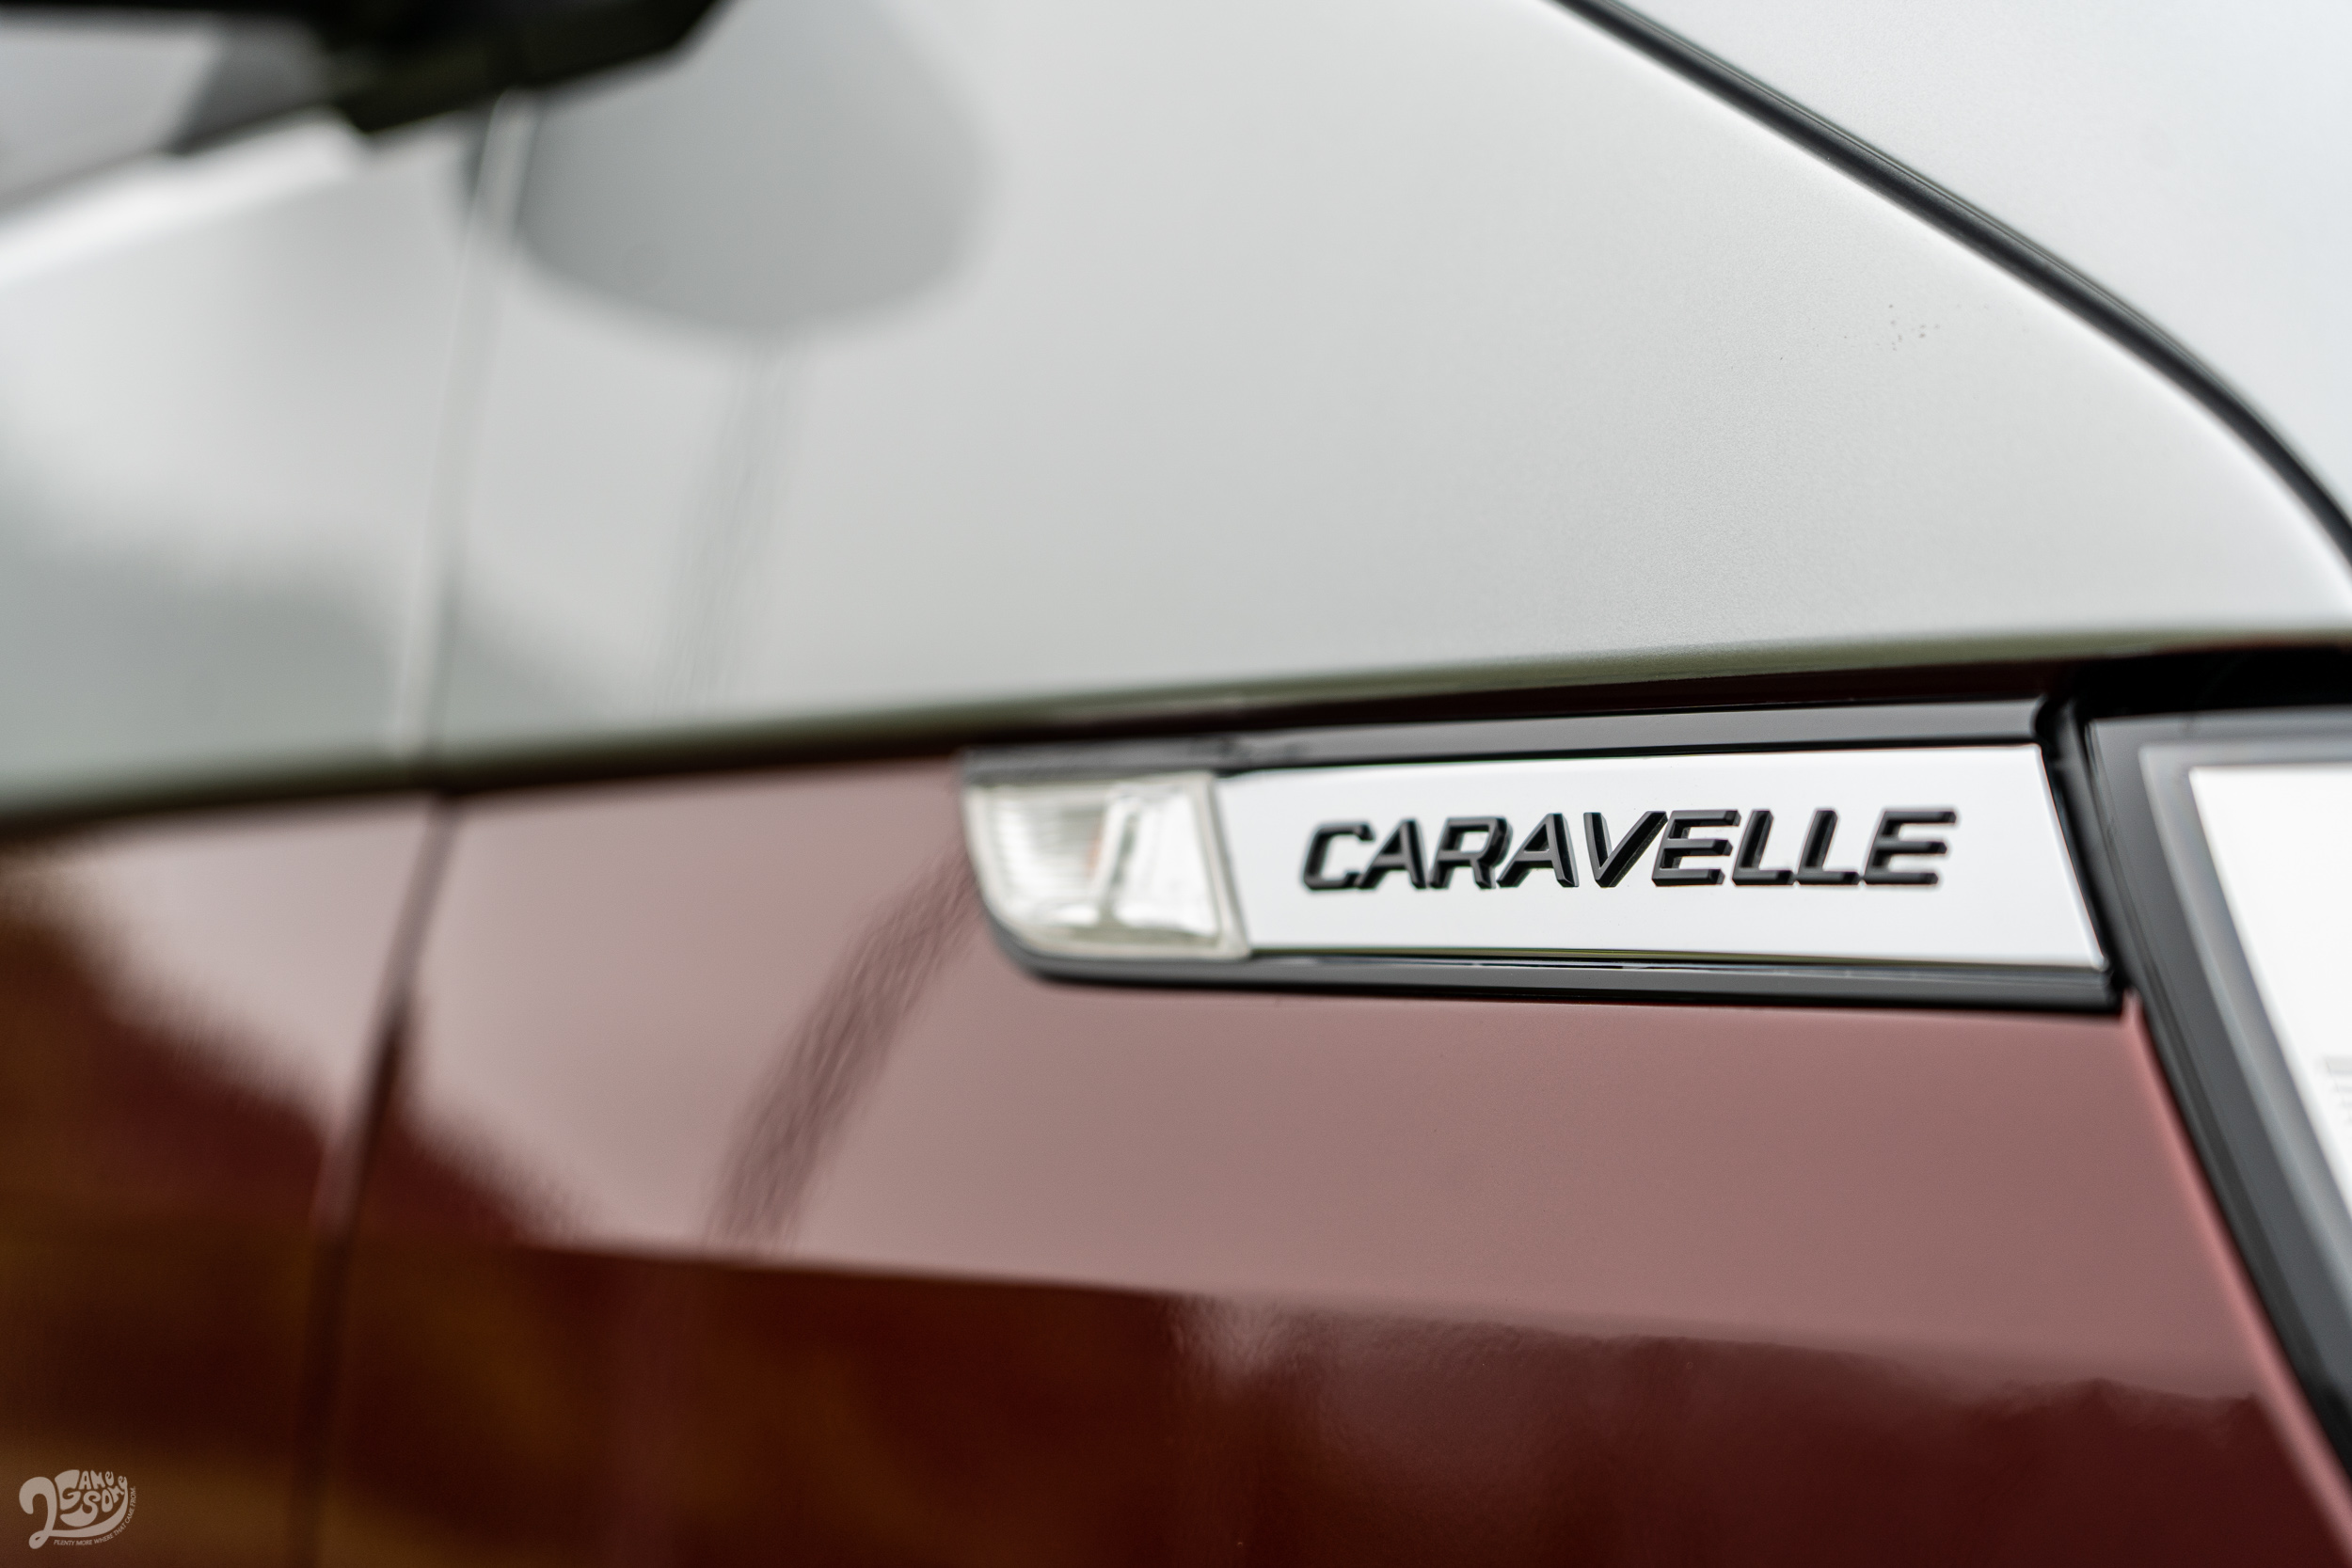 T6.1 Caravelle VanLife Box 的出現讓一車多用的狀況成為了可能。